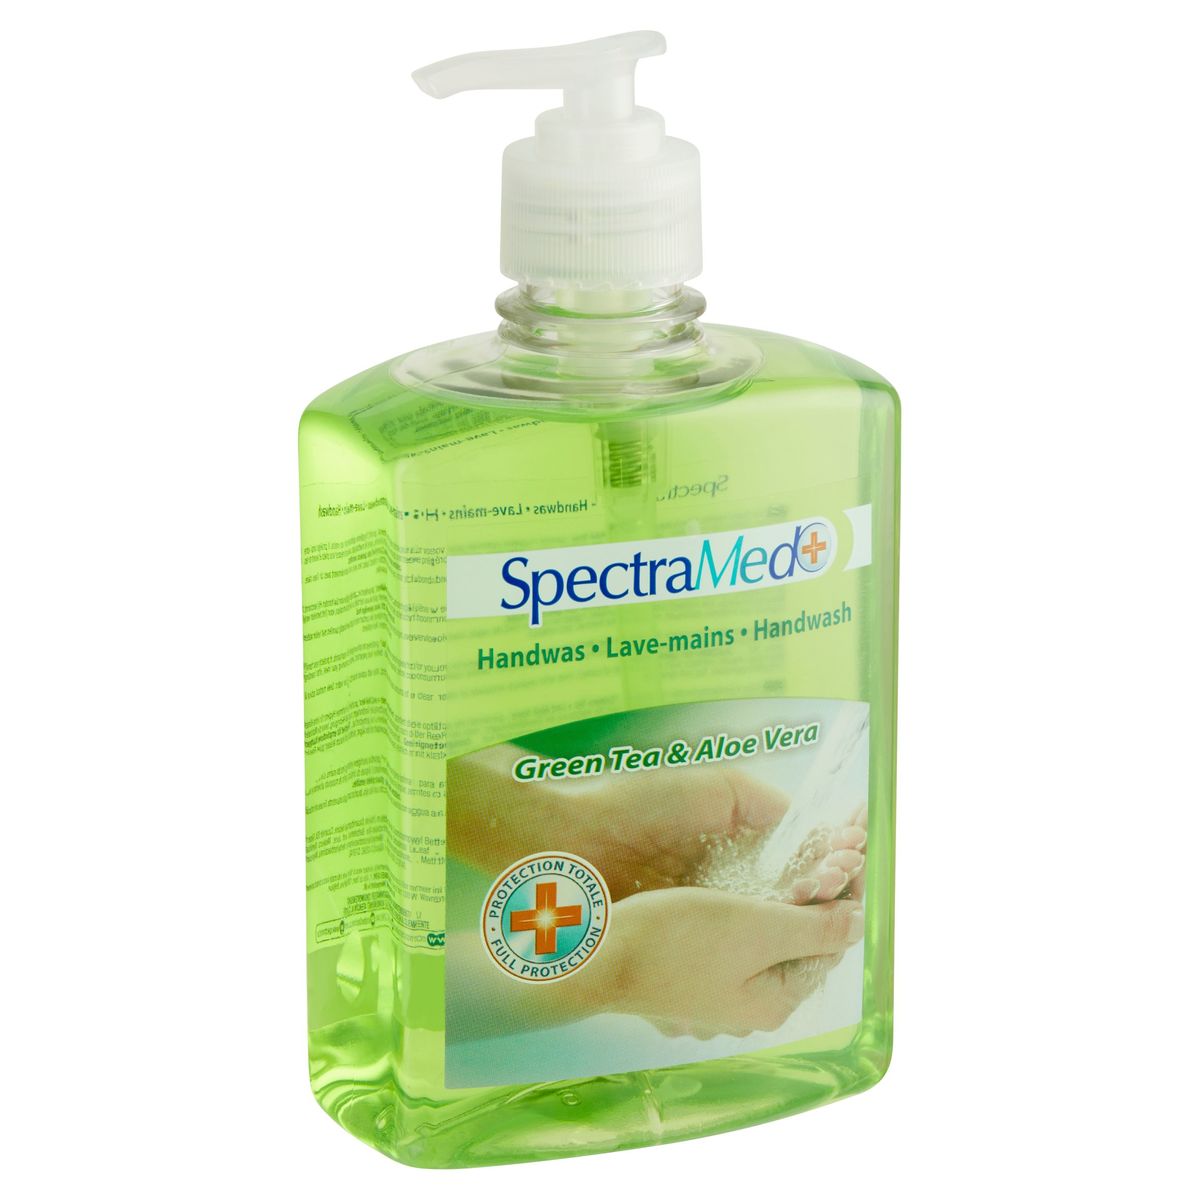 SpectraMed+ Handwash Green Tea & Aloe Vera 500 ml